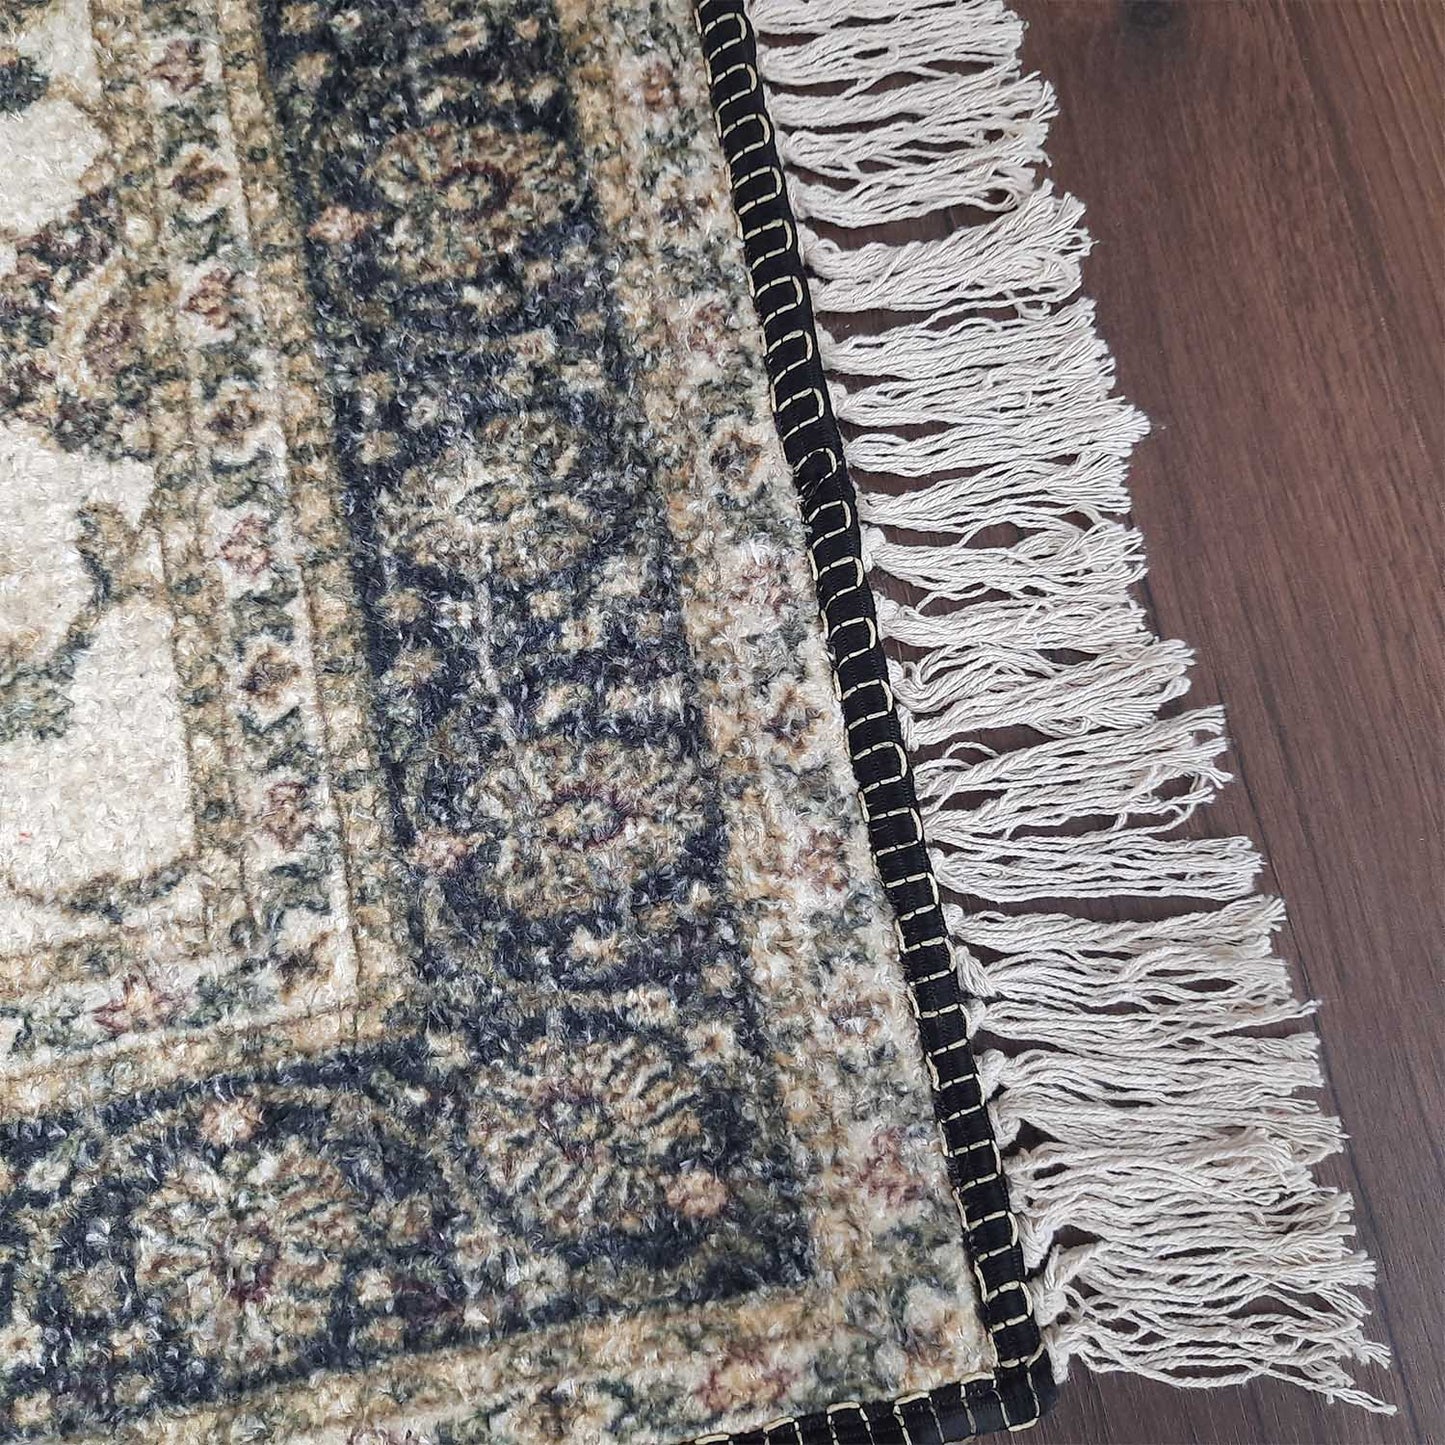 Silk Carpet Persian Design Collection Beige – Living Room Rug -Avioni